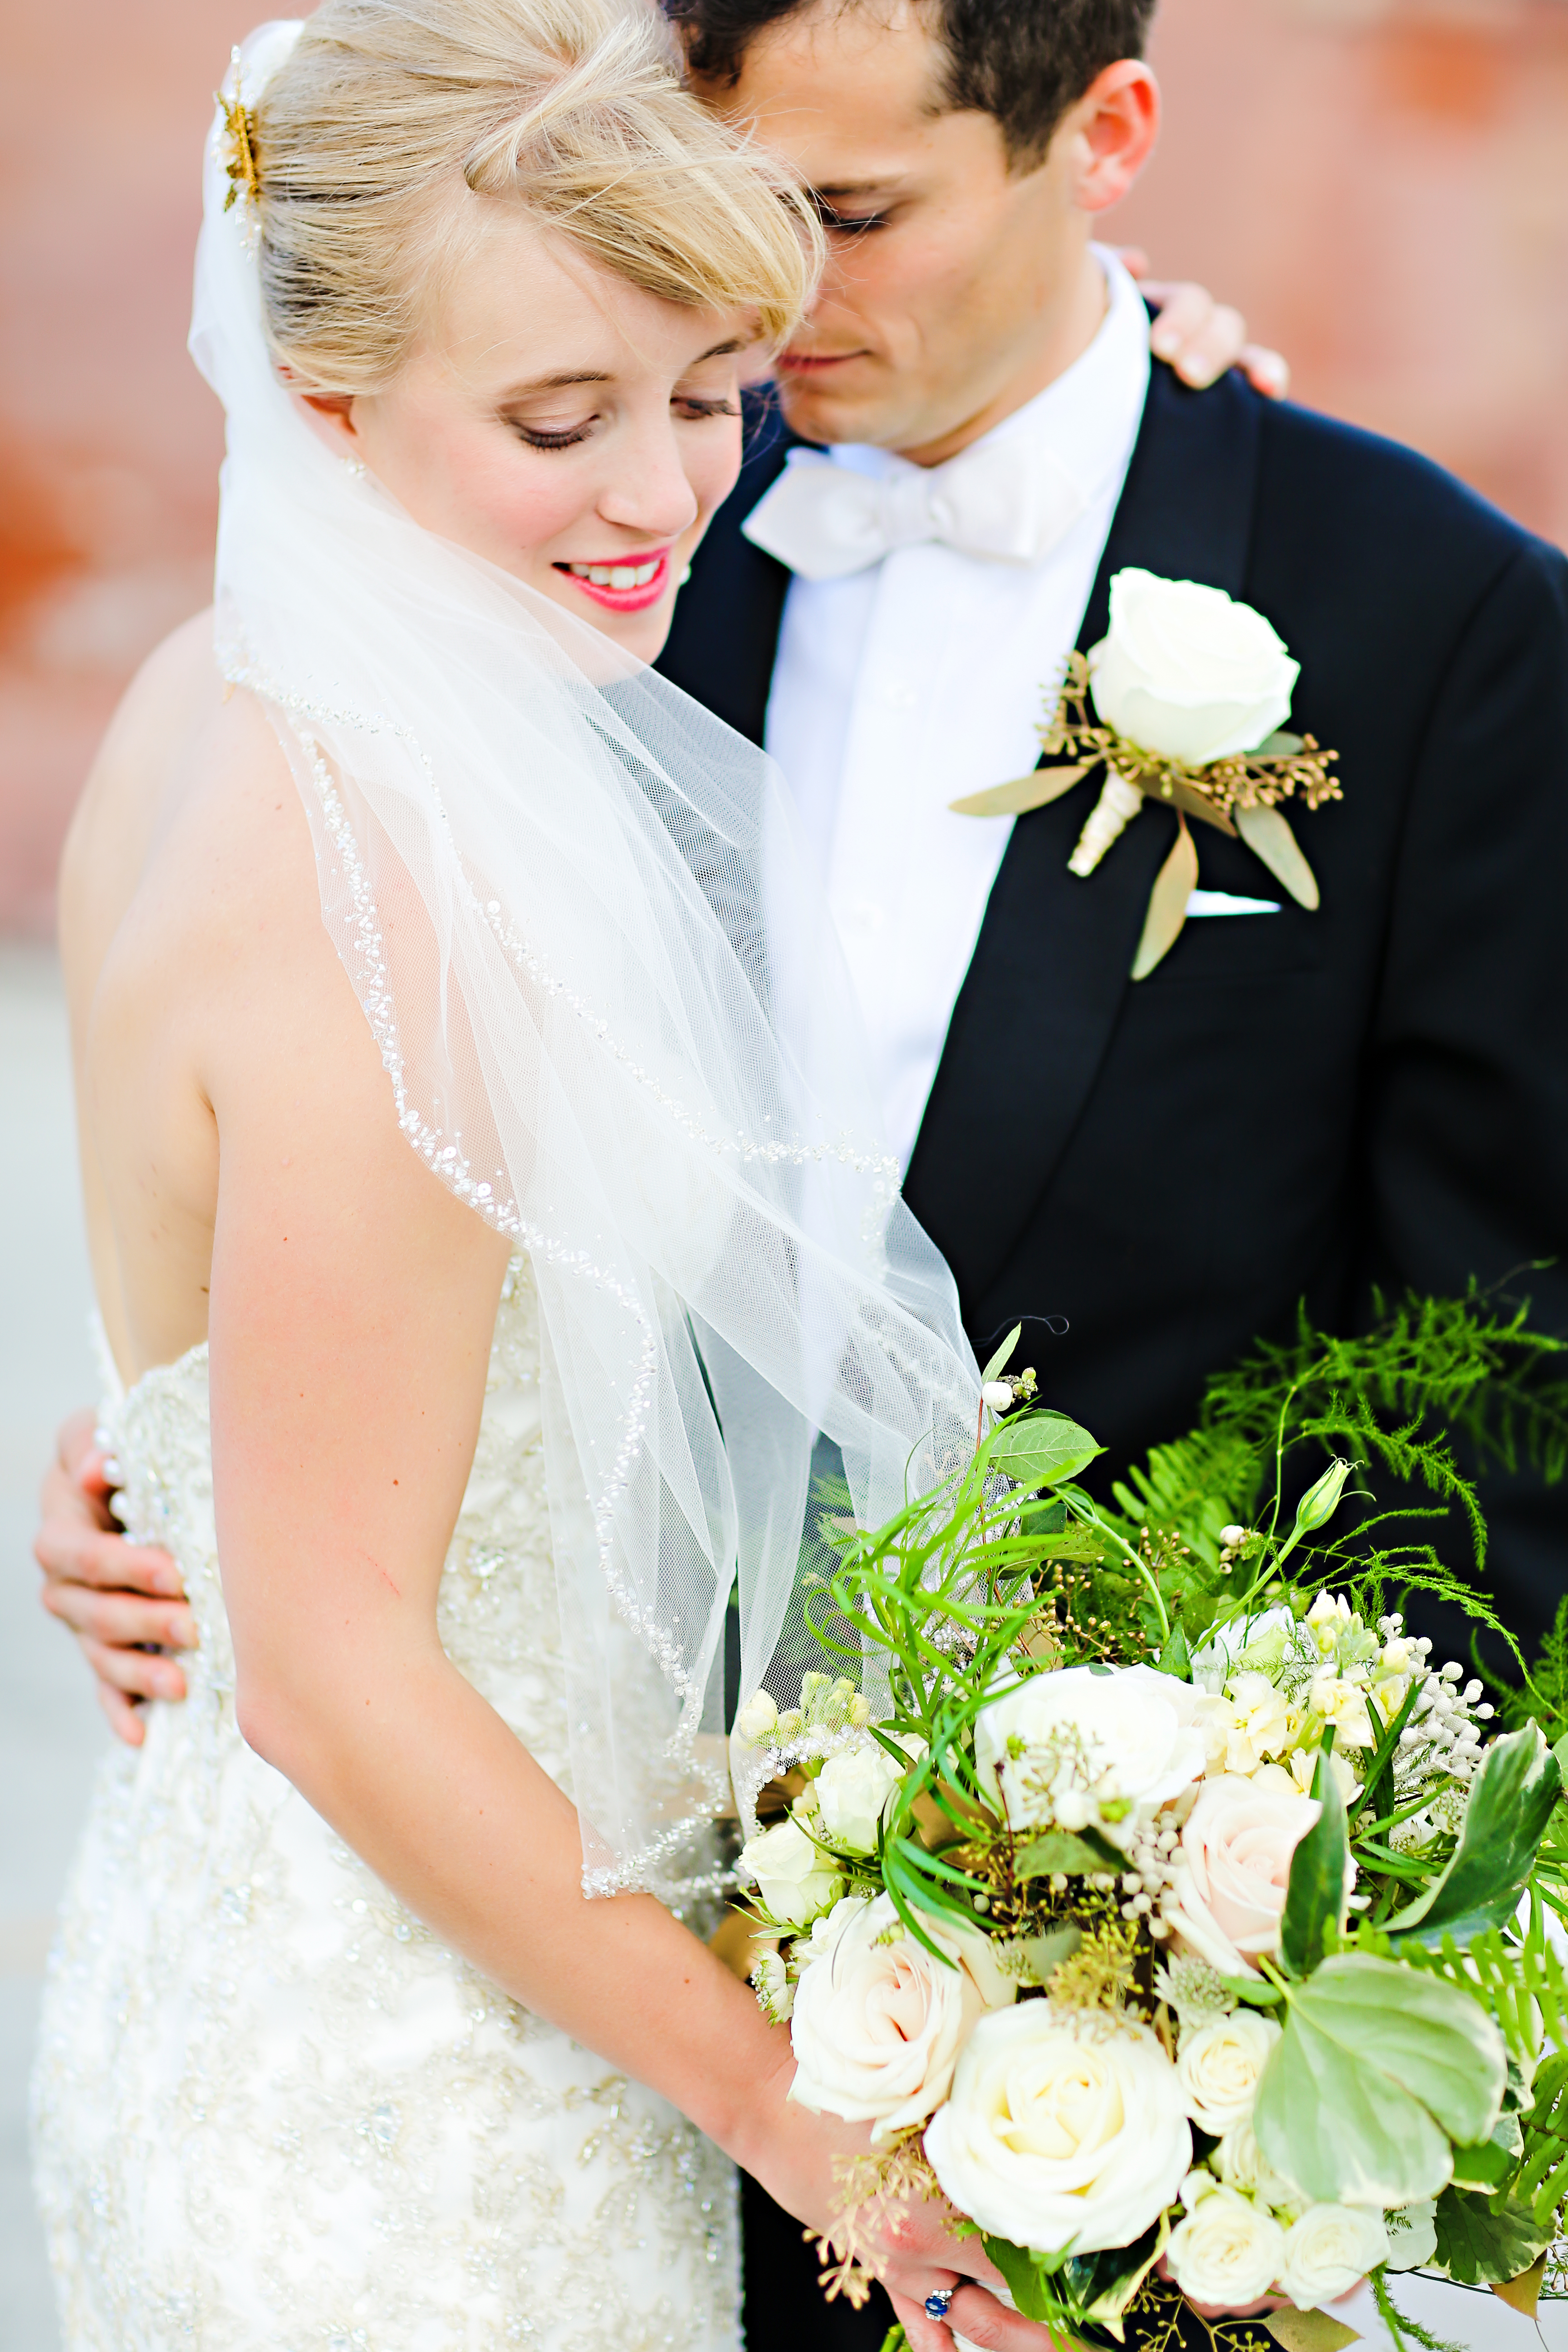 Bride and groom portraits | Jessica Strickland Photography and Jessica Dum Wedding Coordination